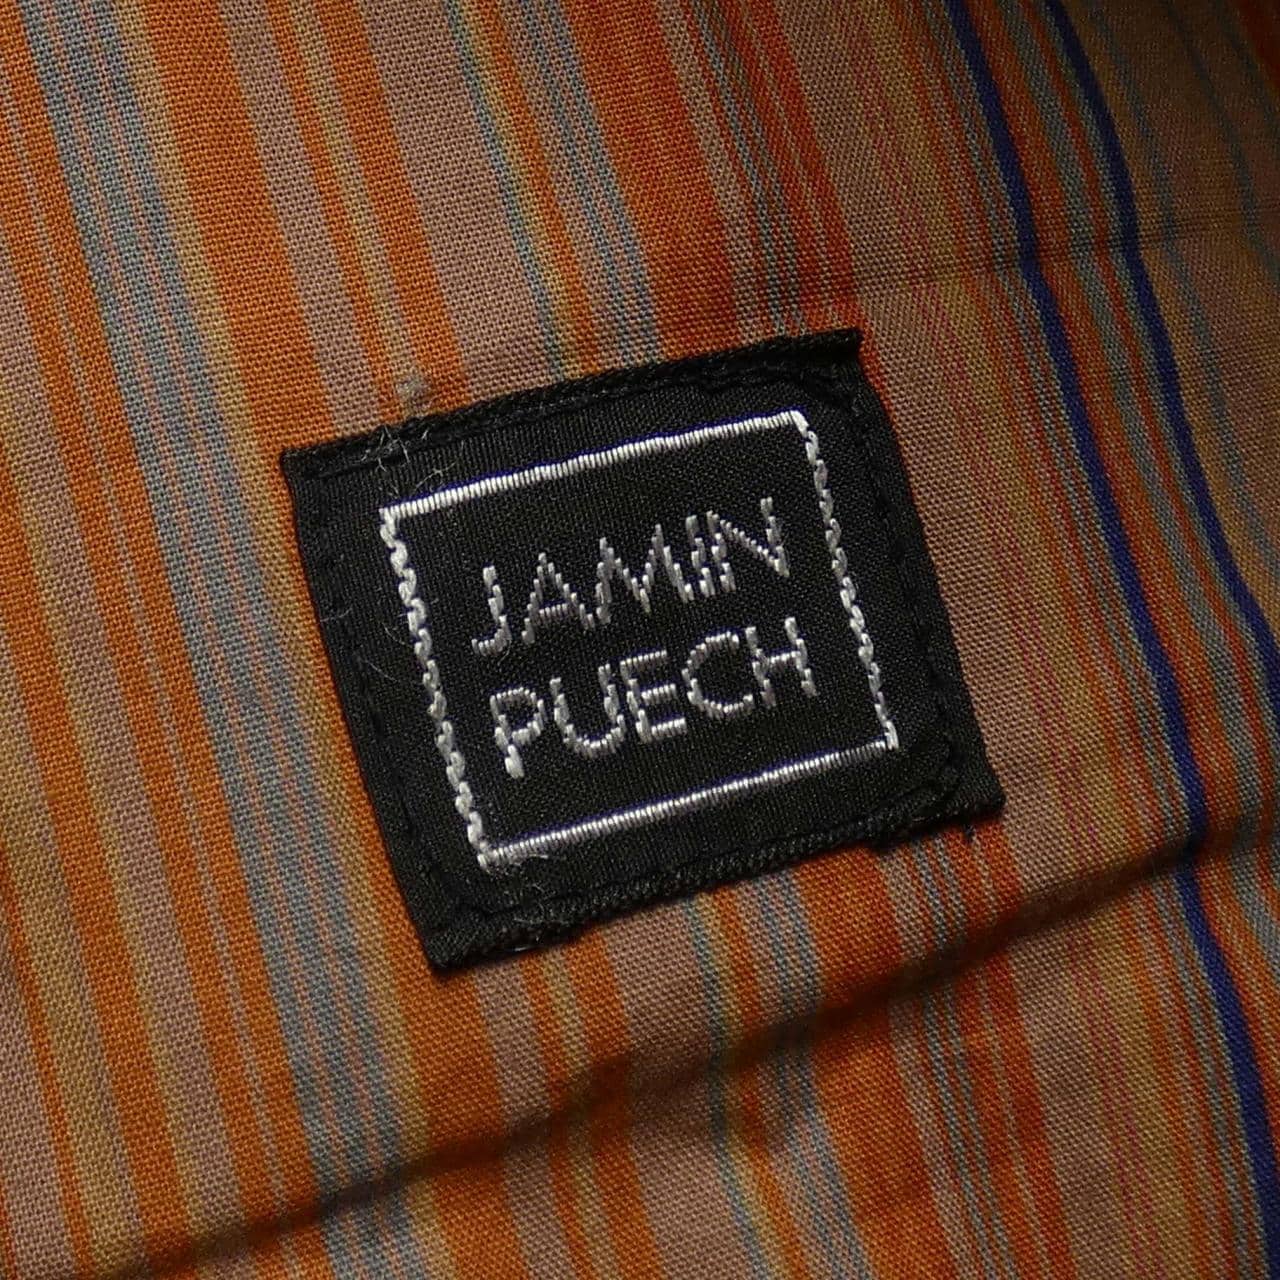 JAMIN PUECH BAG